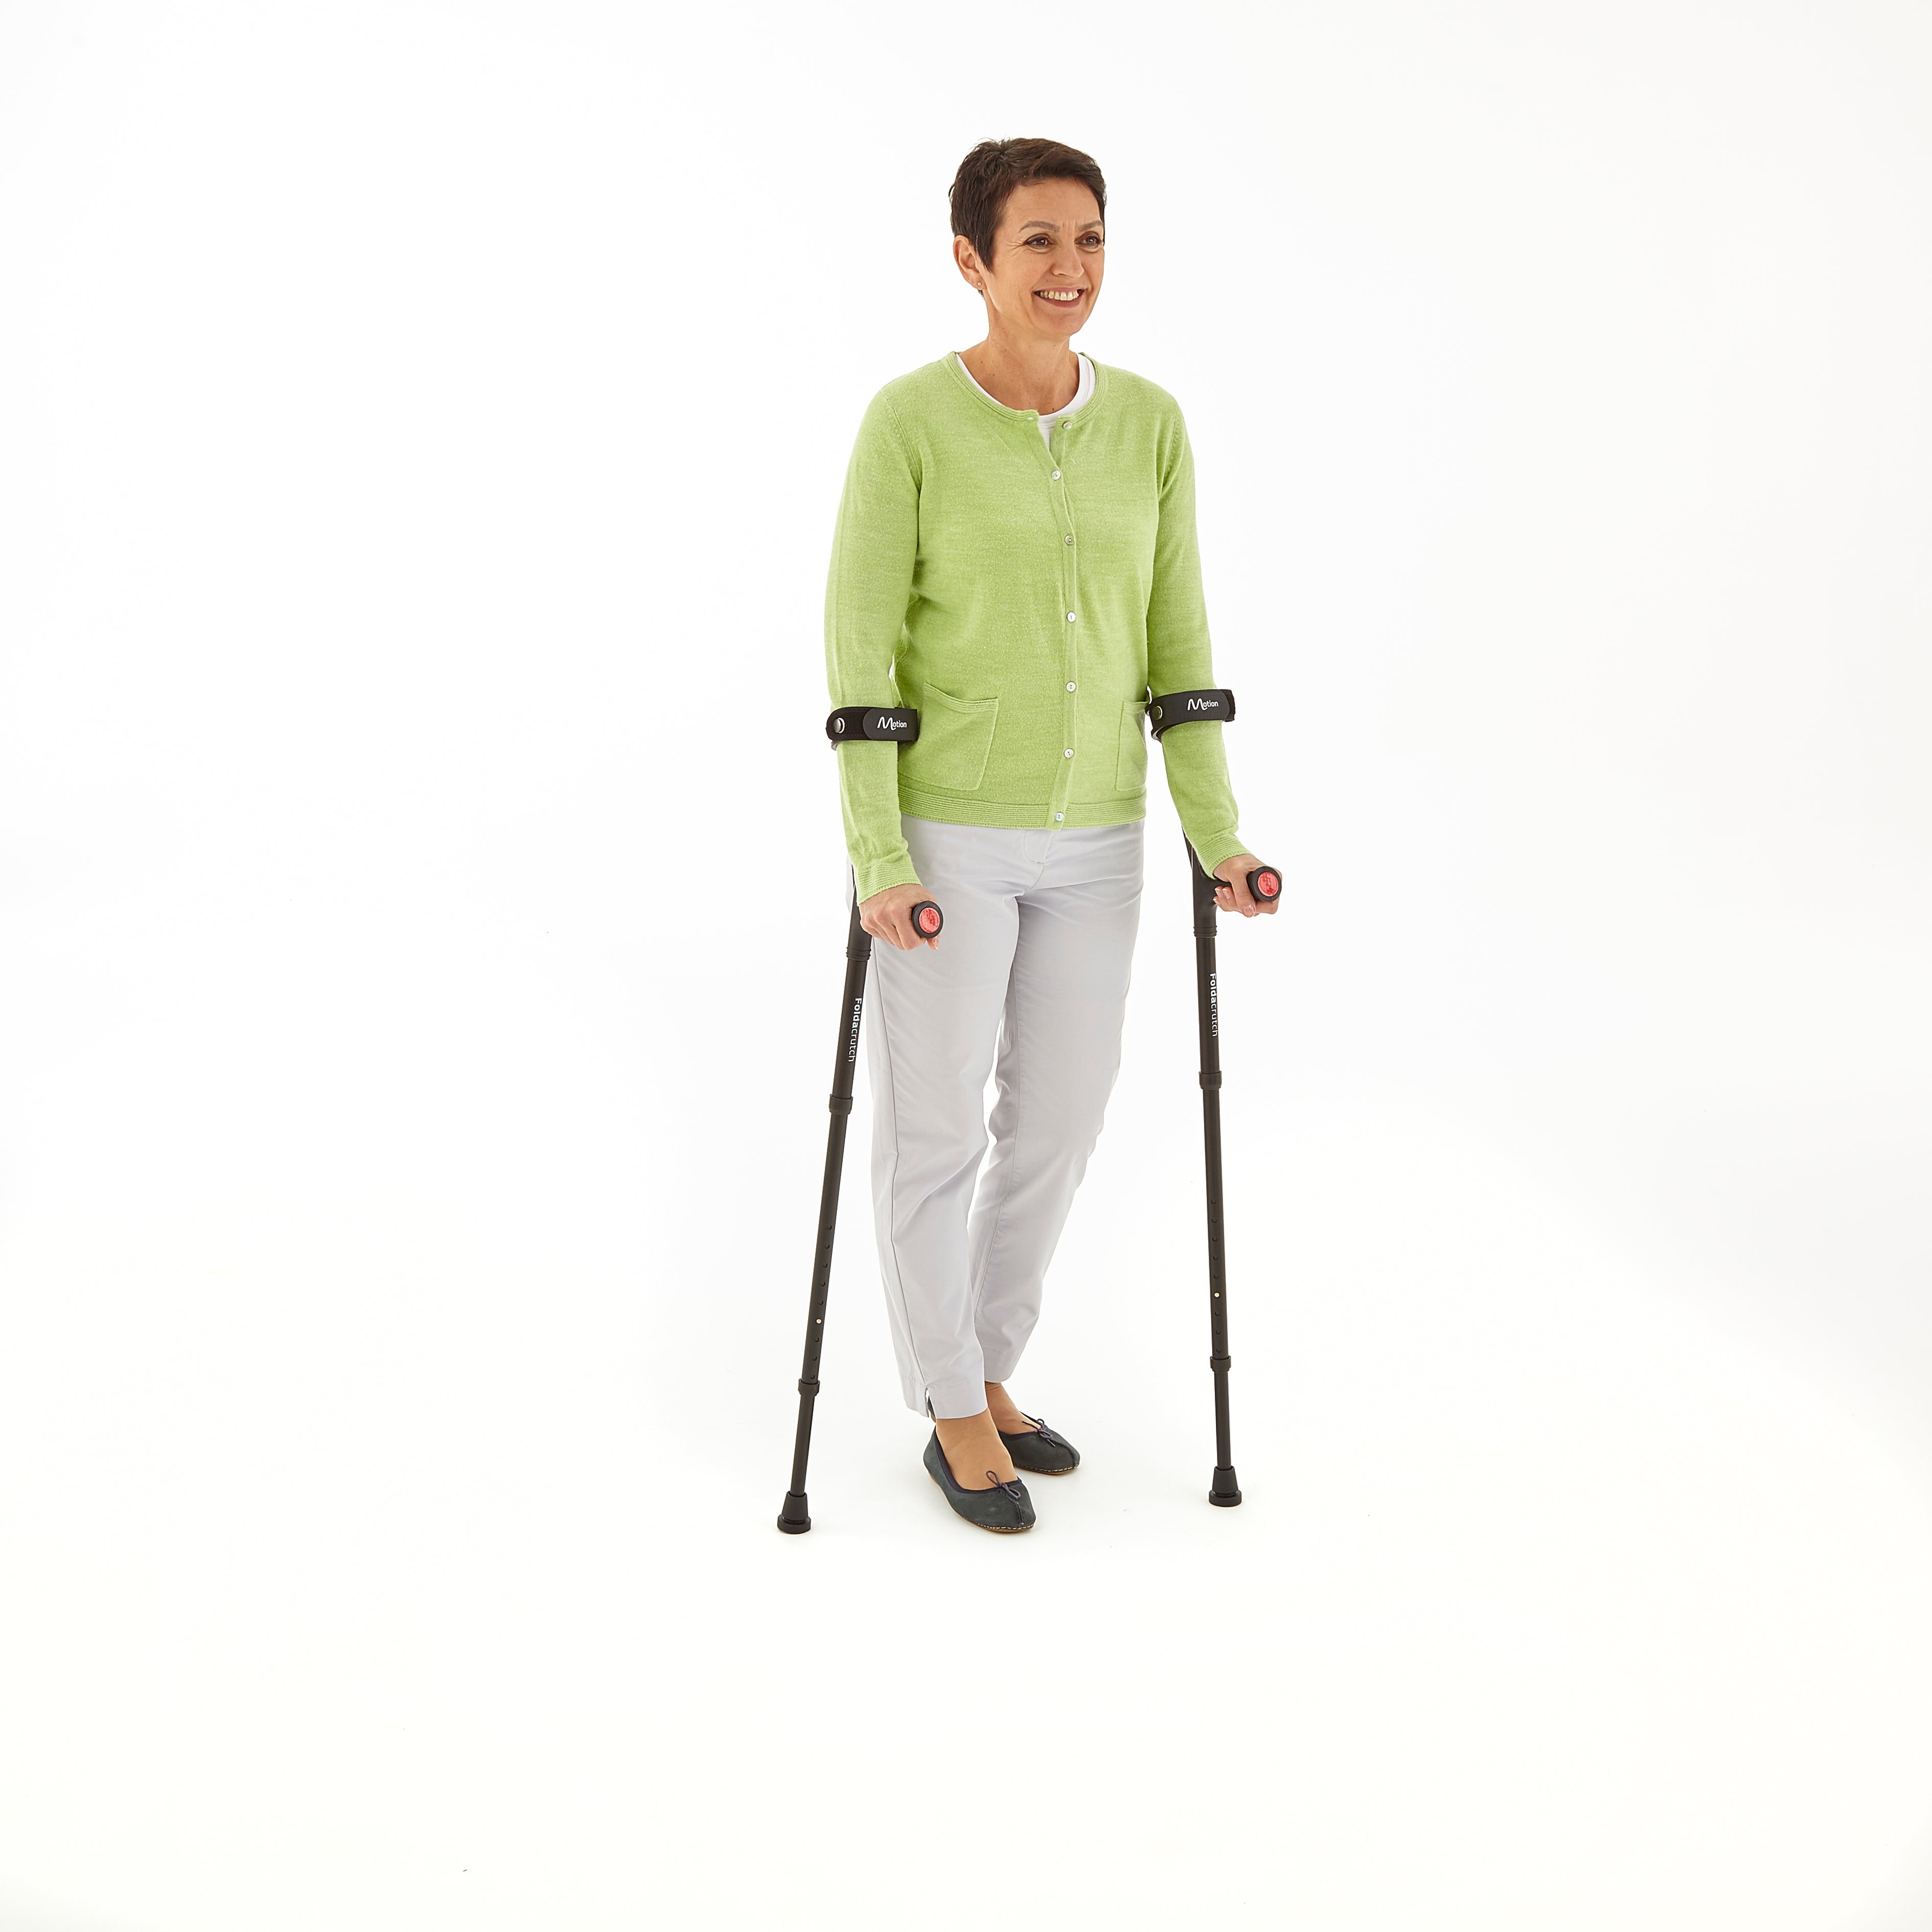 Foldacrutch - The Ultimate Folding Crutches